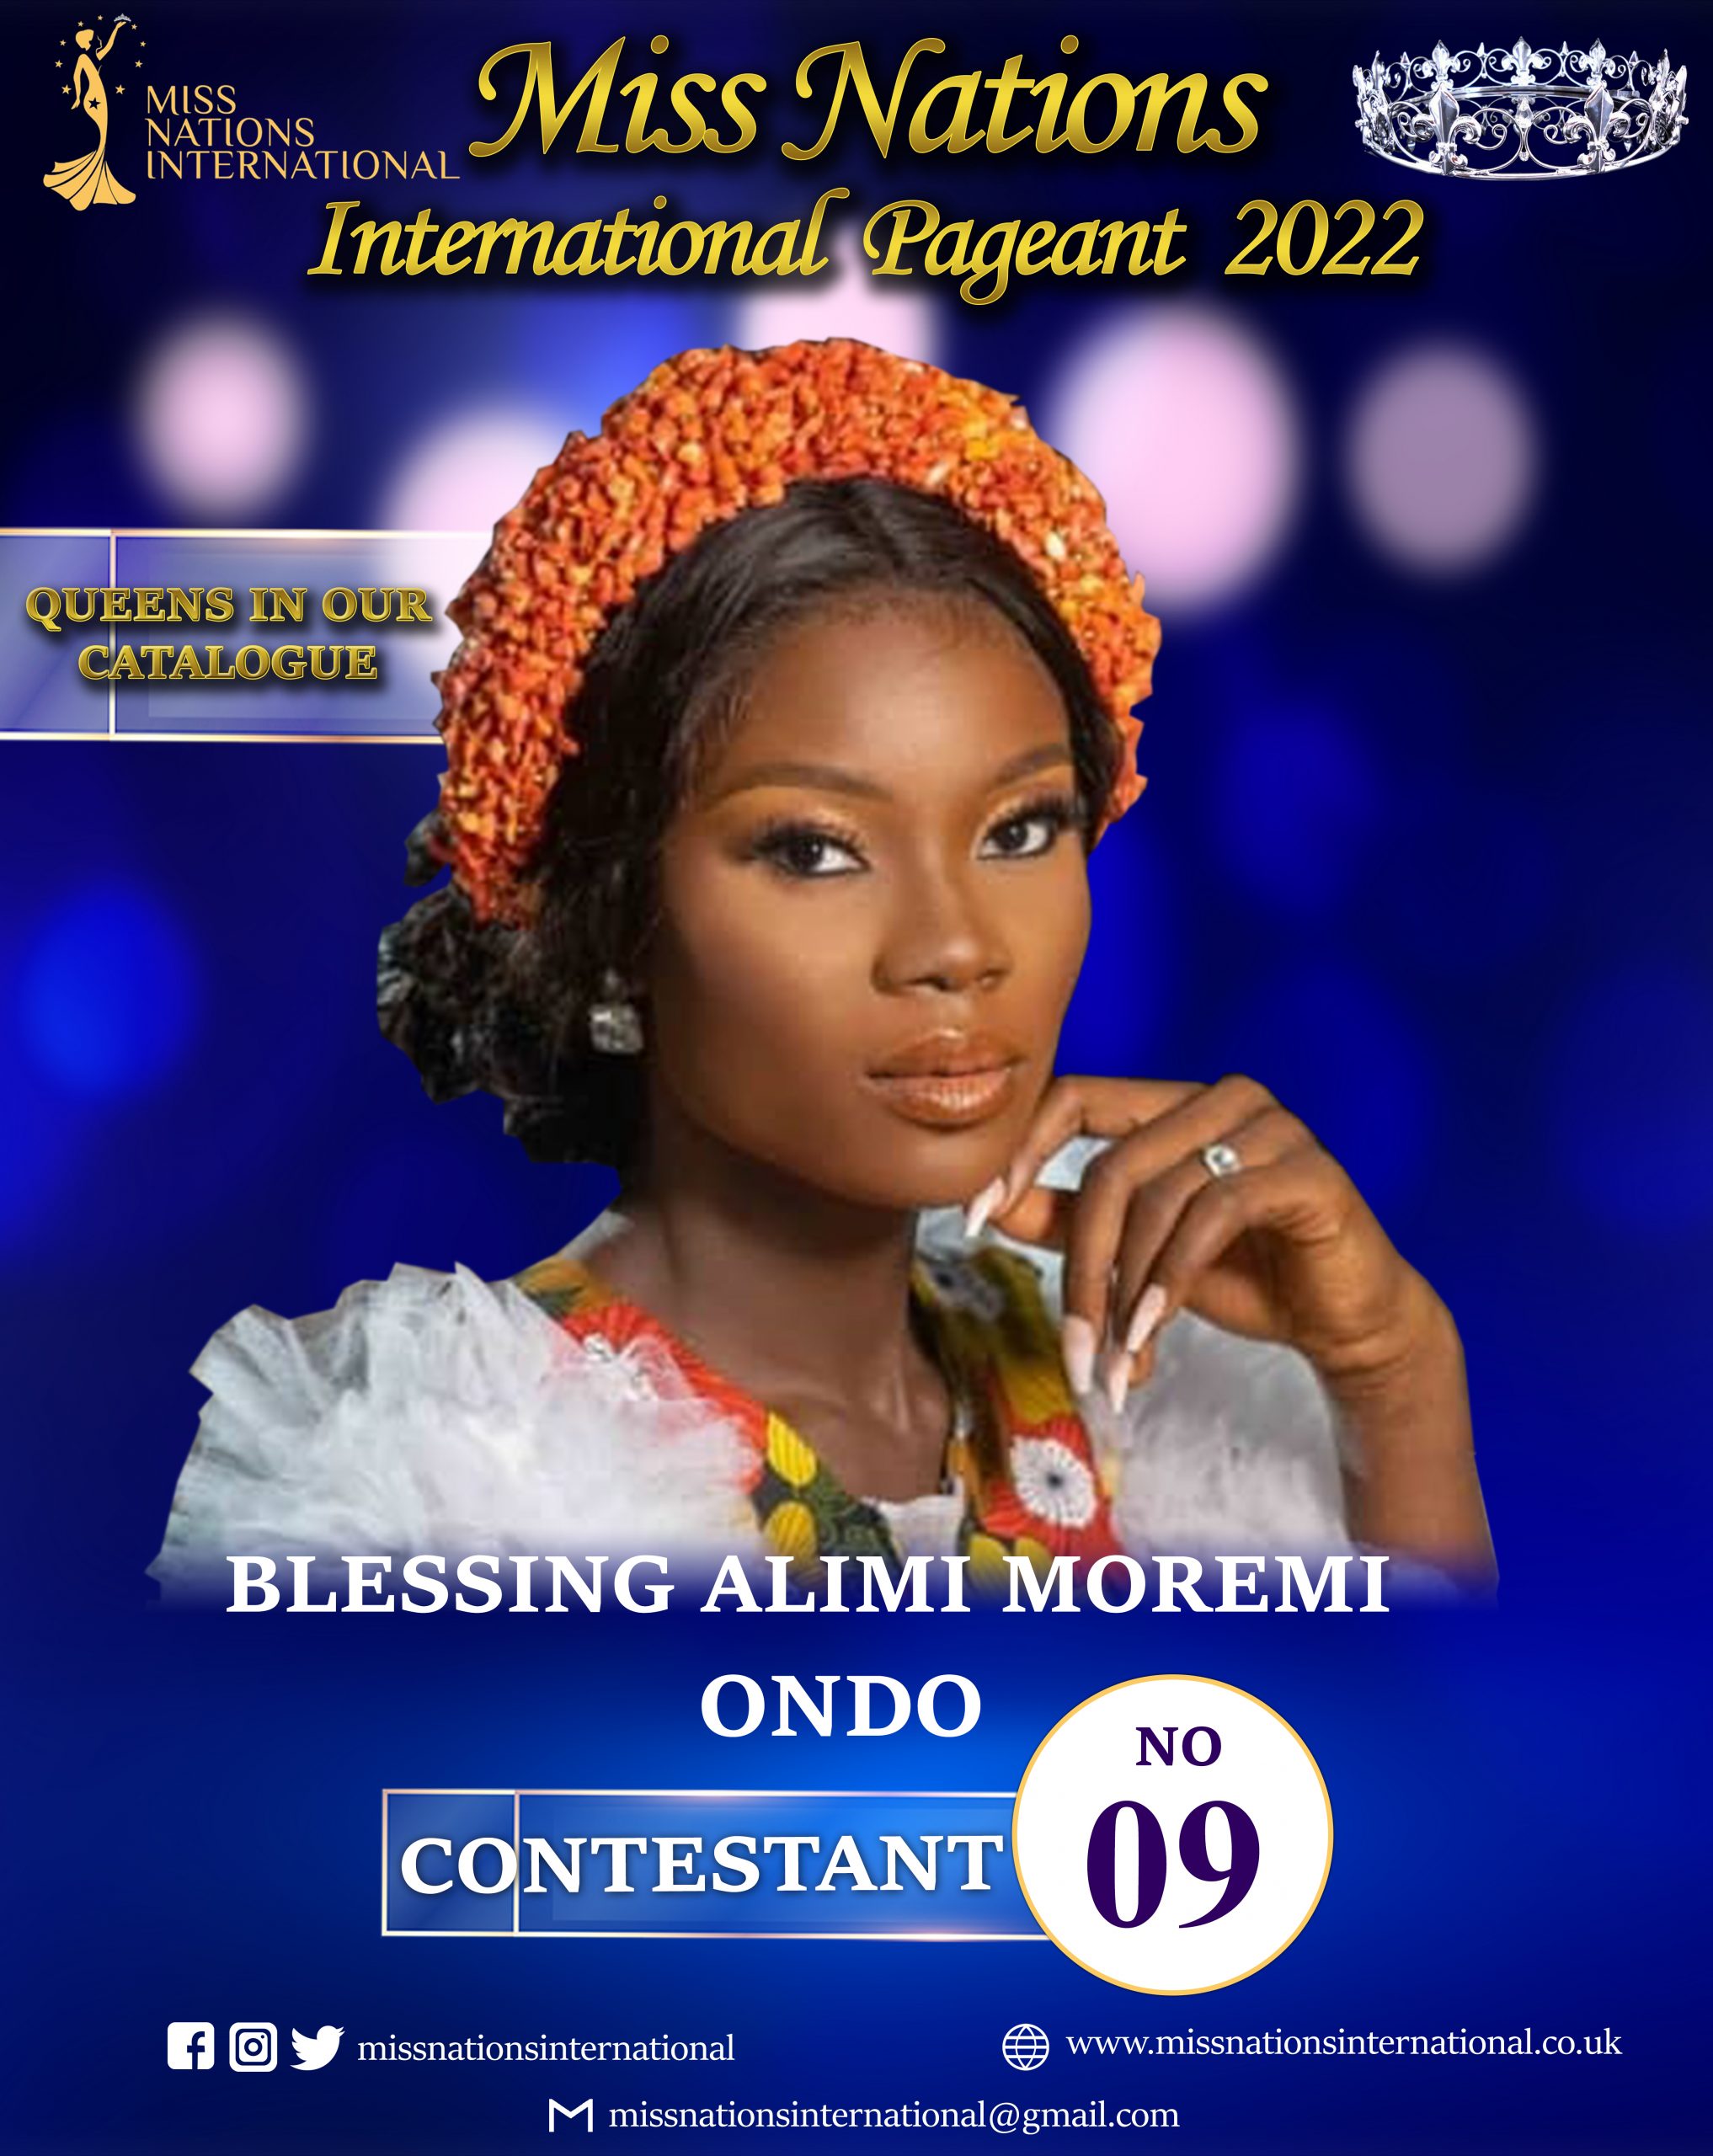 Vote for Blessing Alimi Moremi